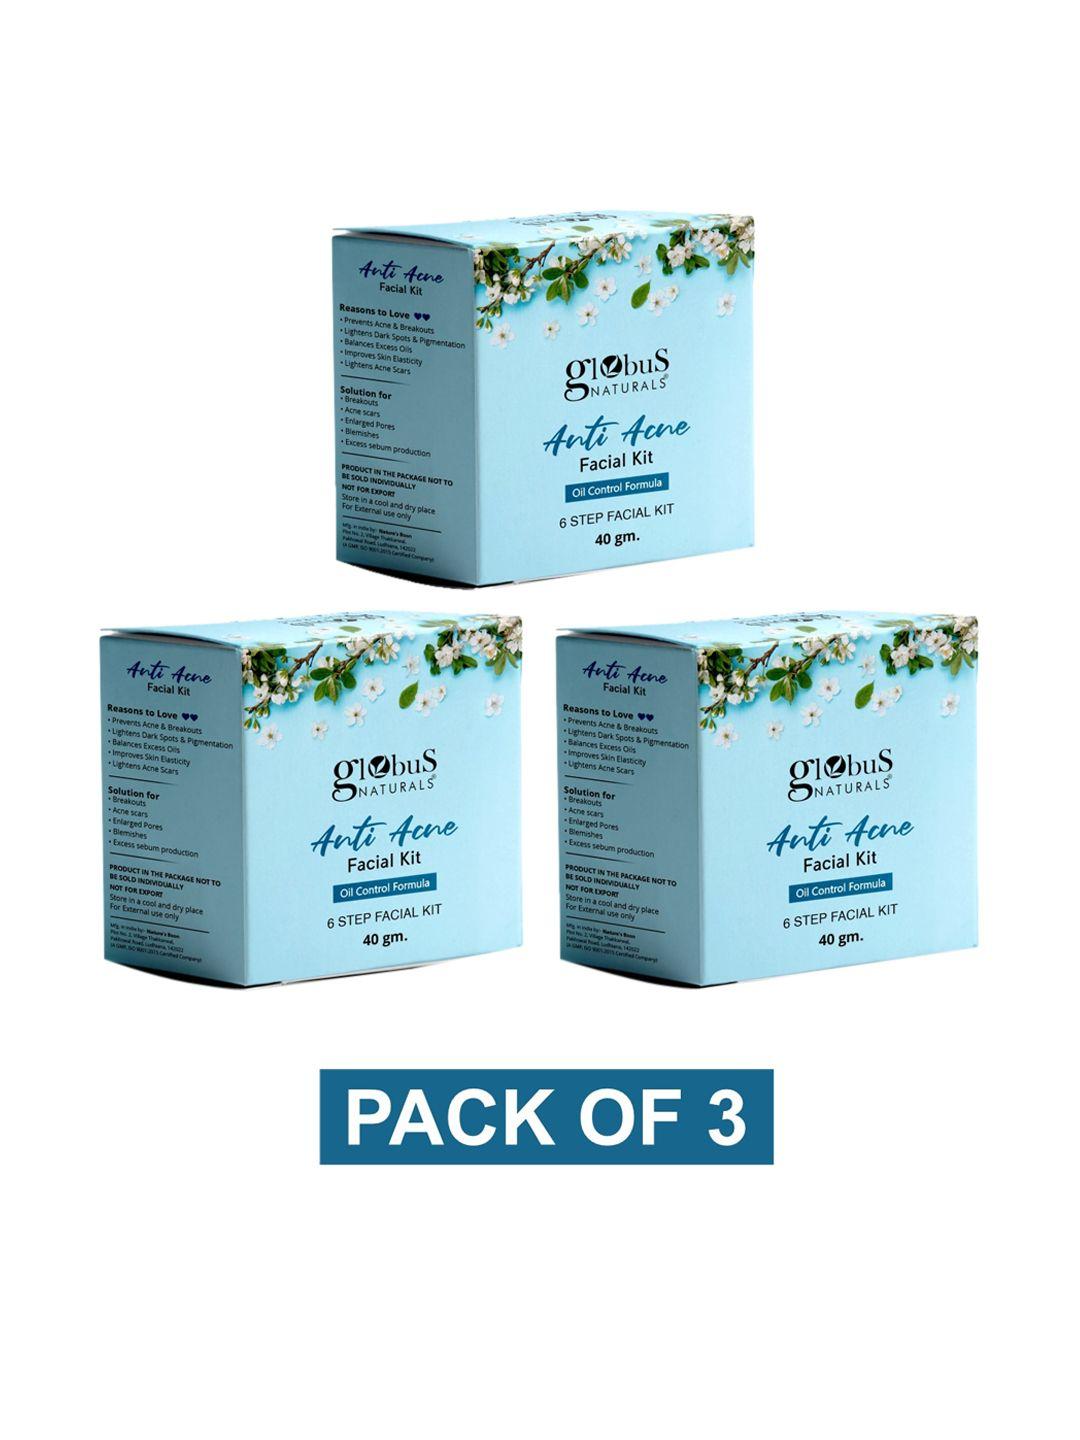 globus naturals set of 3 anti-acne 6 step oil control formula facial kits - 40g each